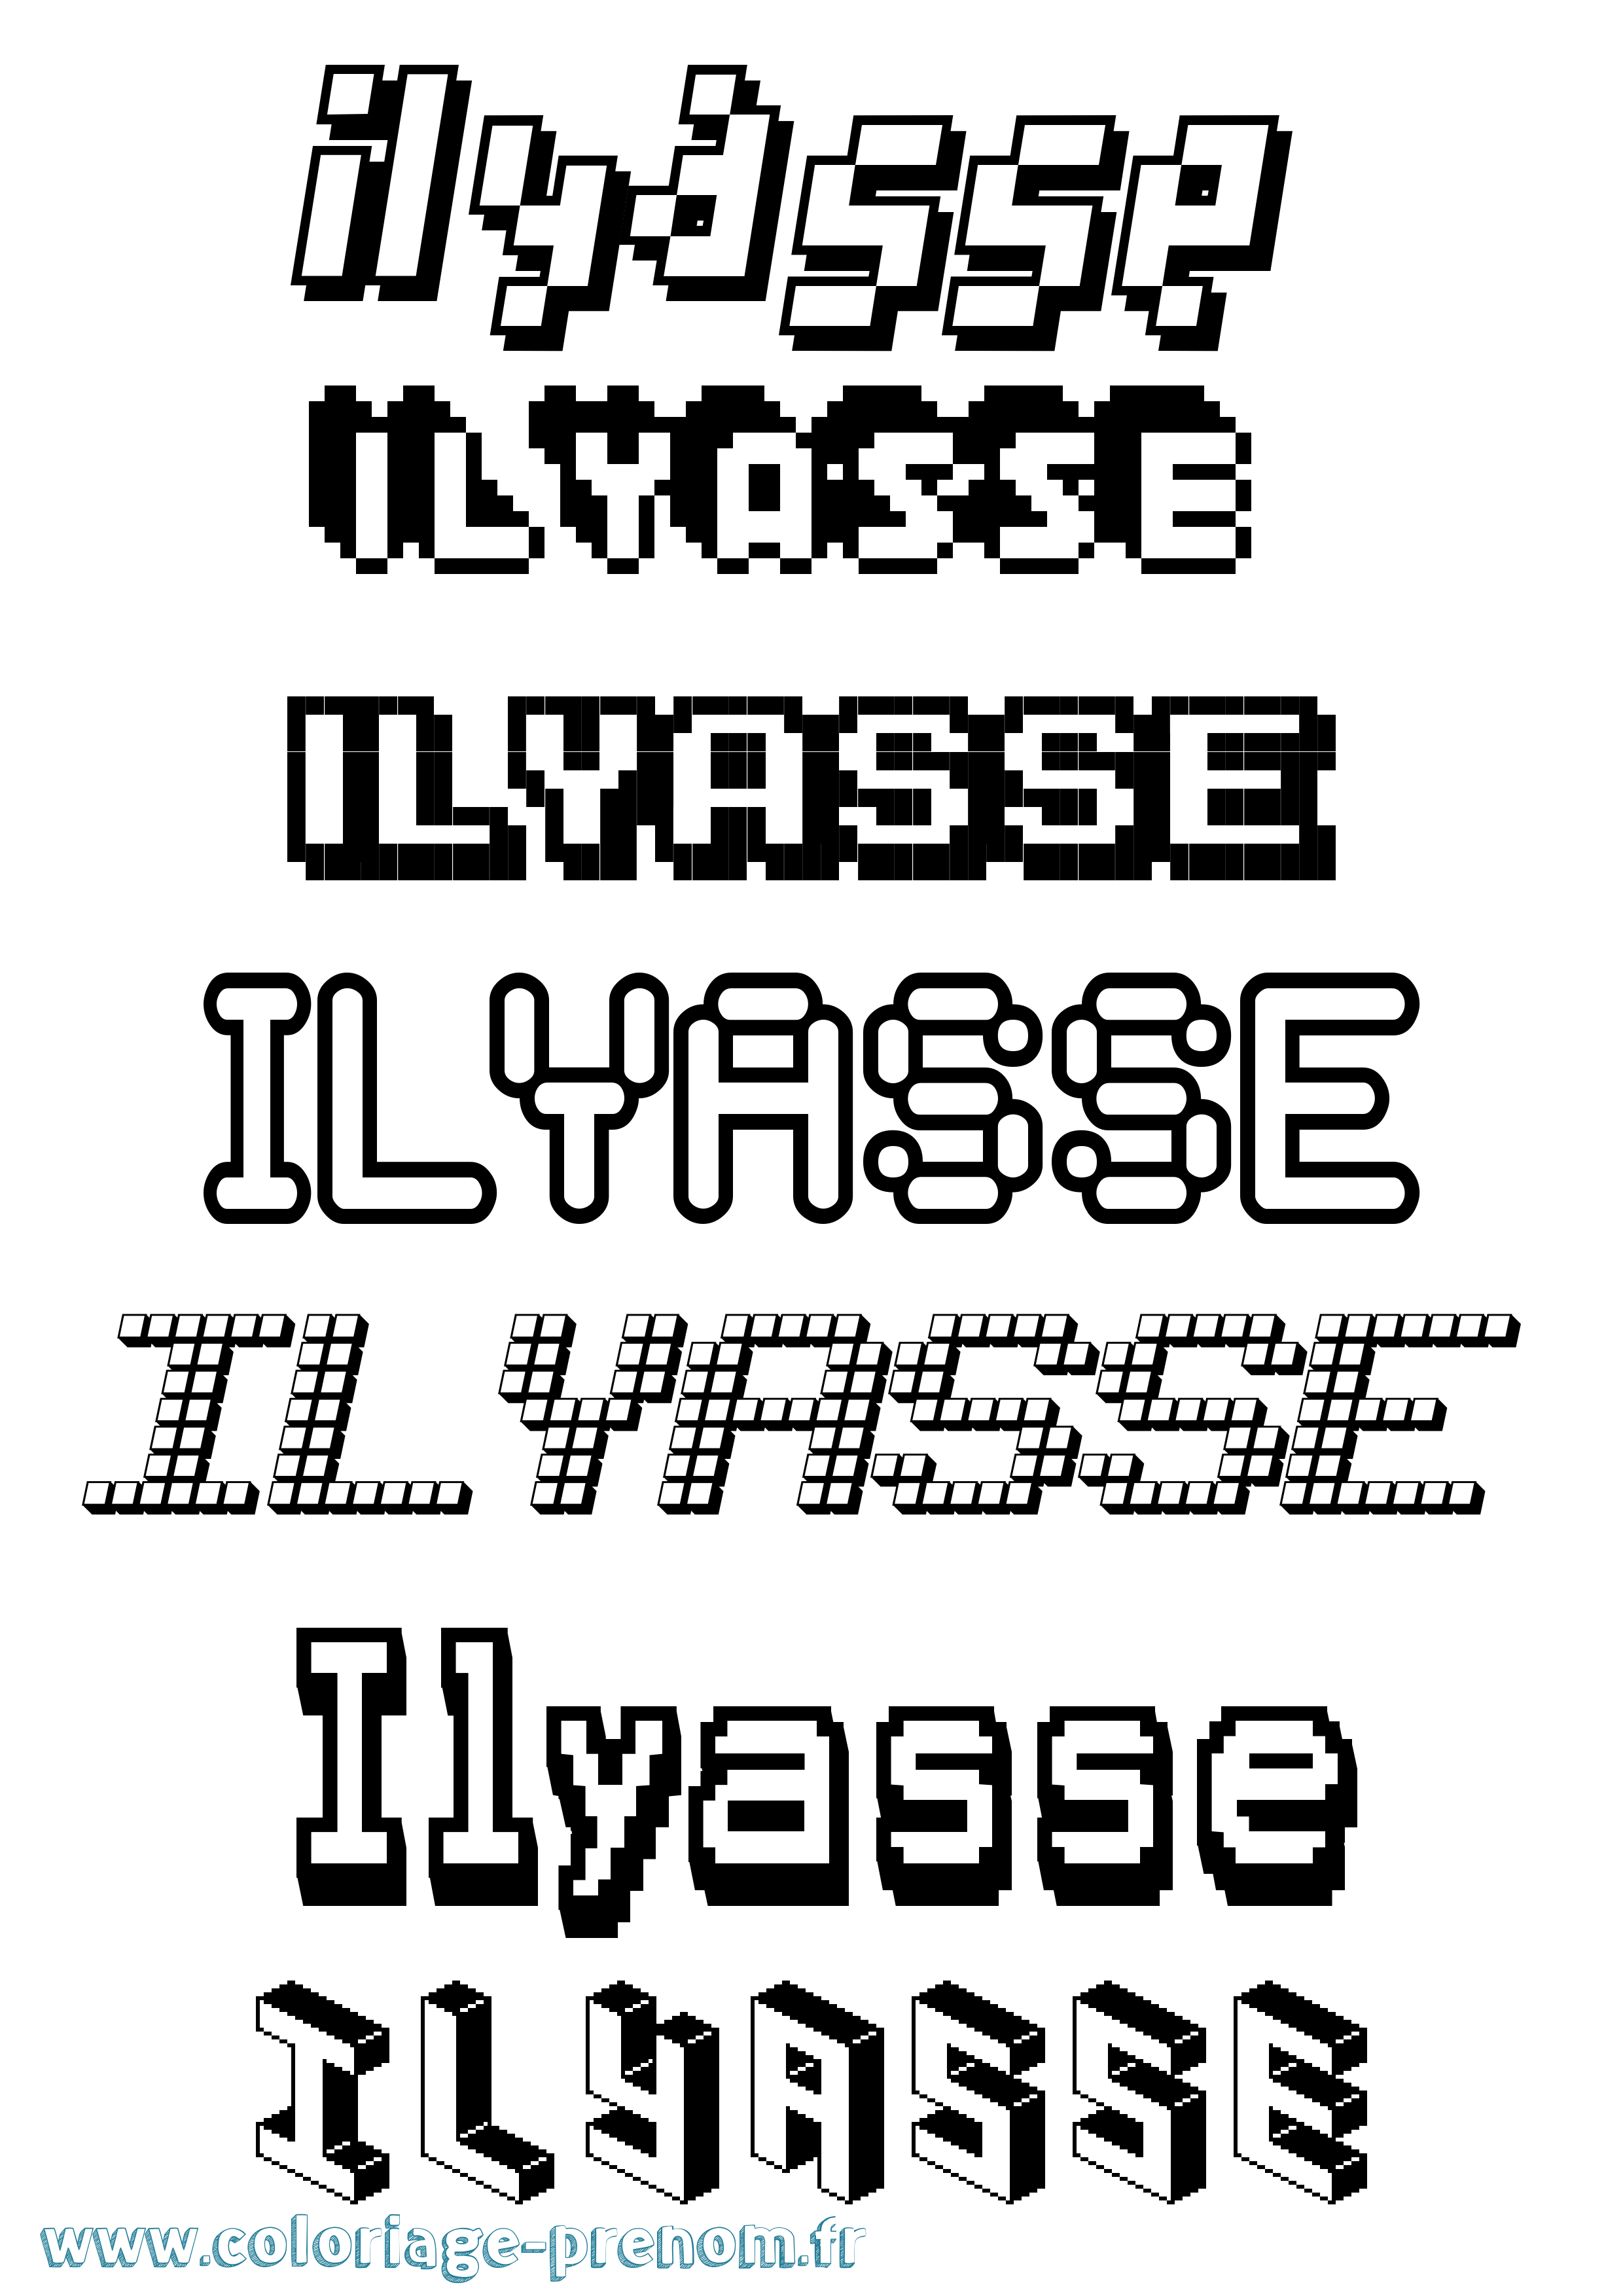 Coloriage prénom Ilyasse Pixel